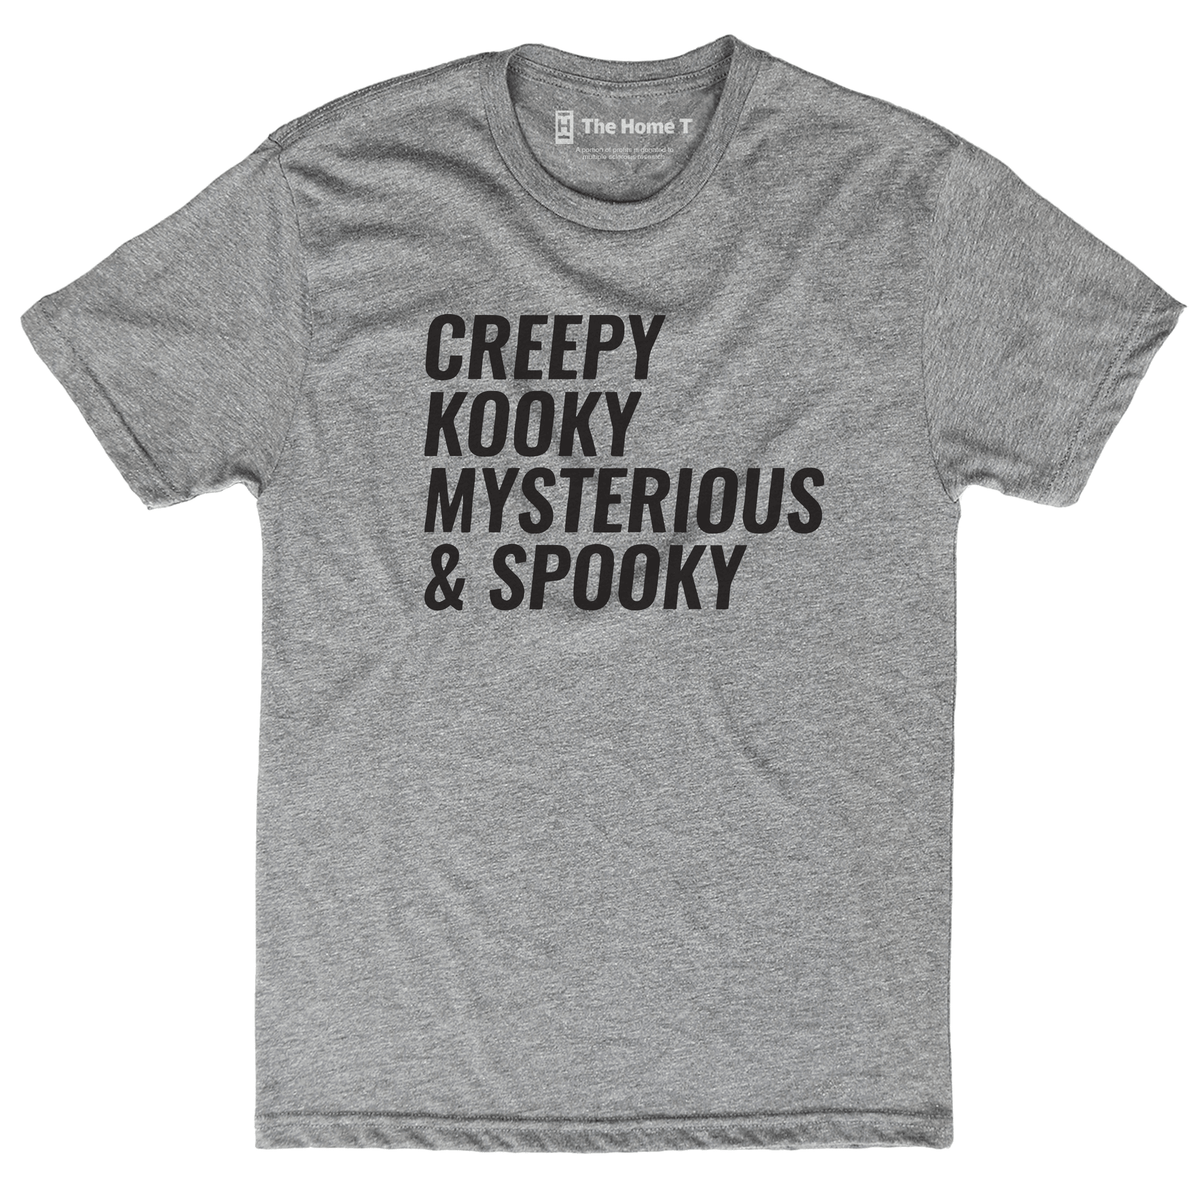 Creepy Kooky Mysterious & Spooky